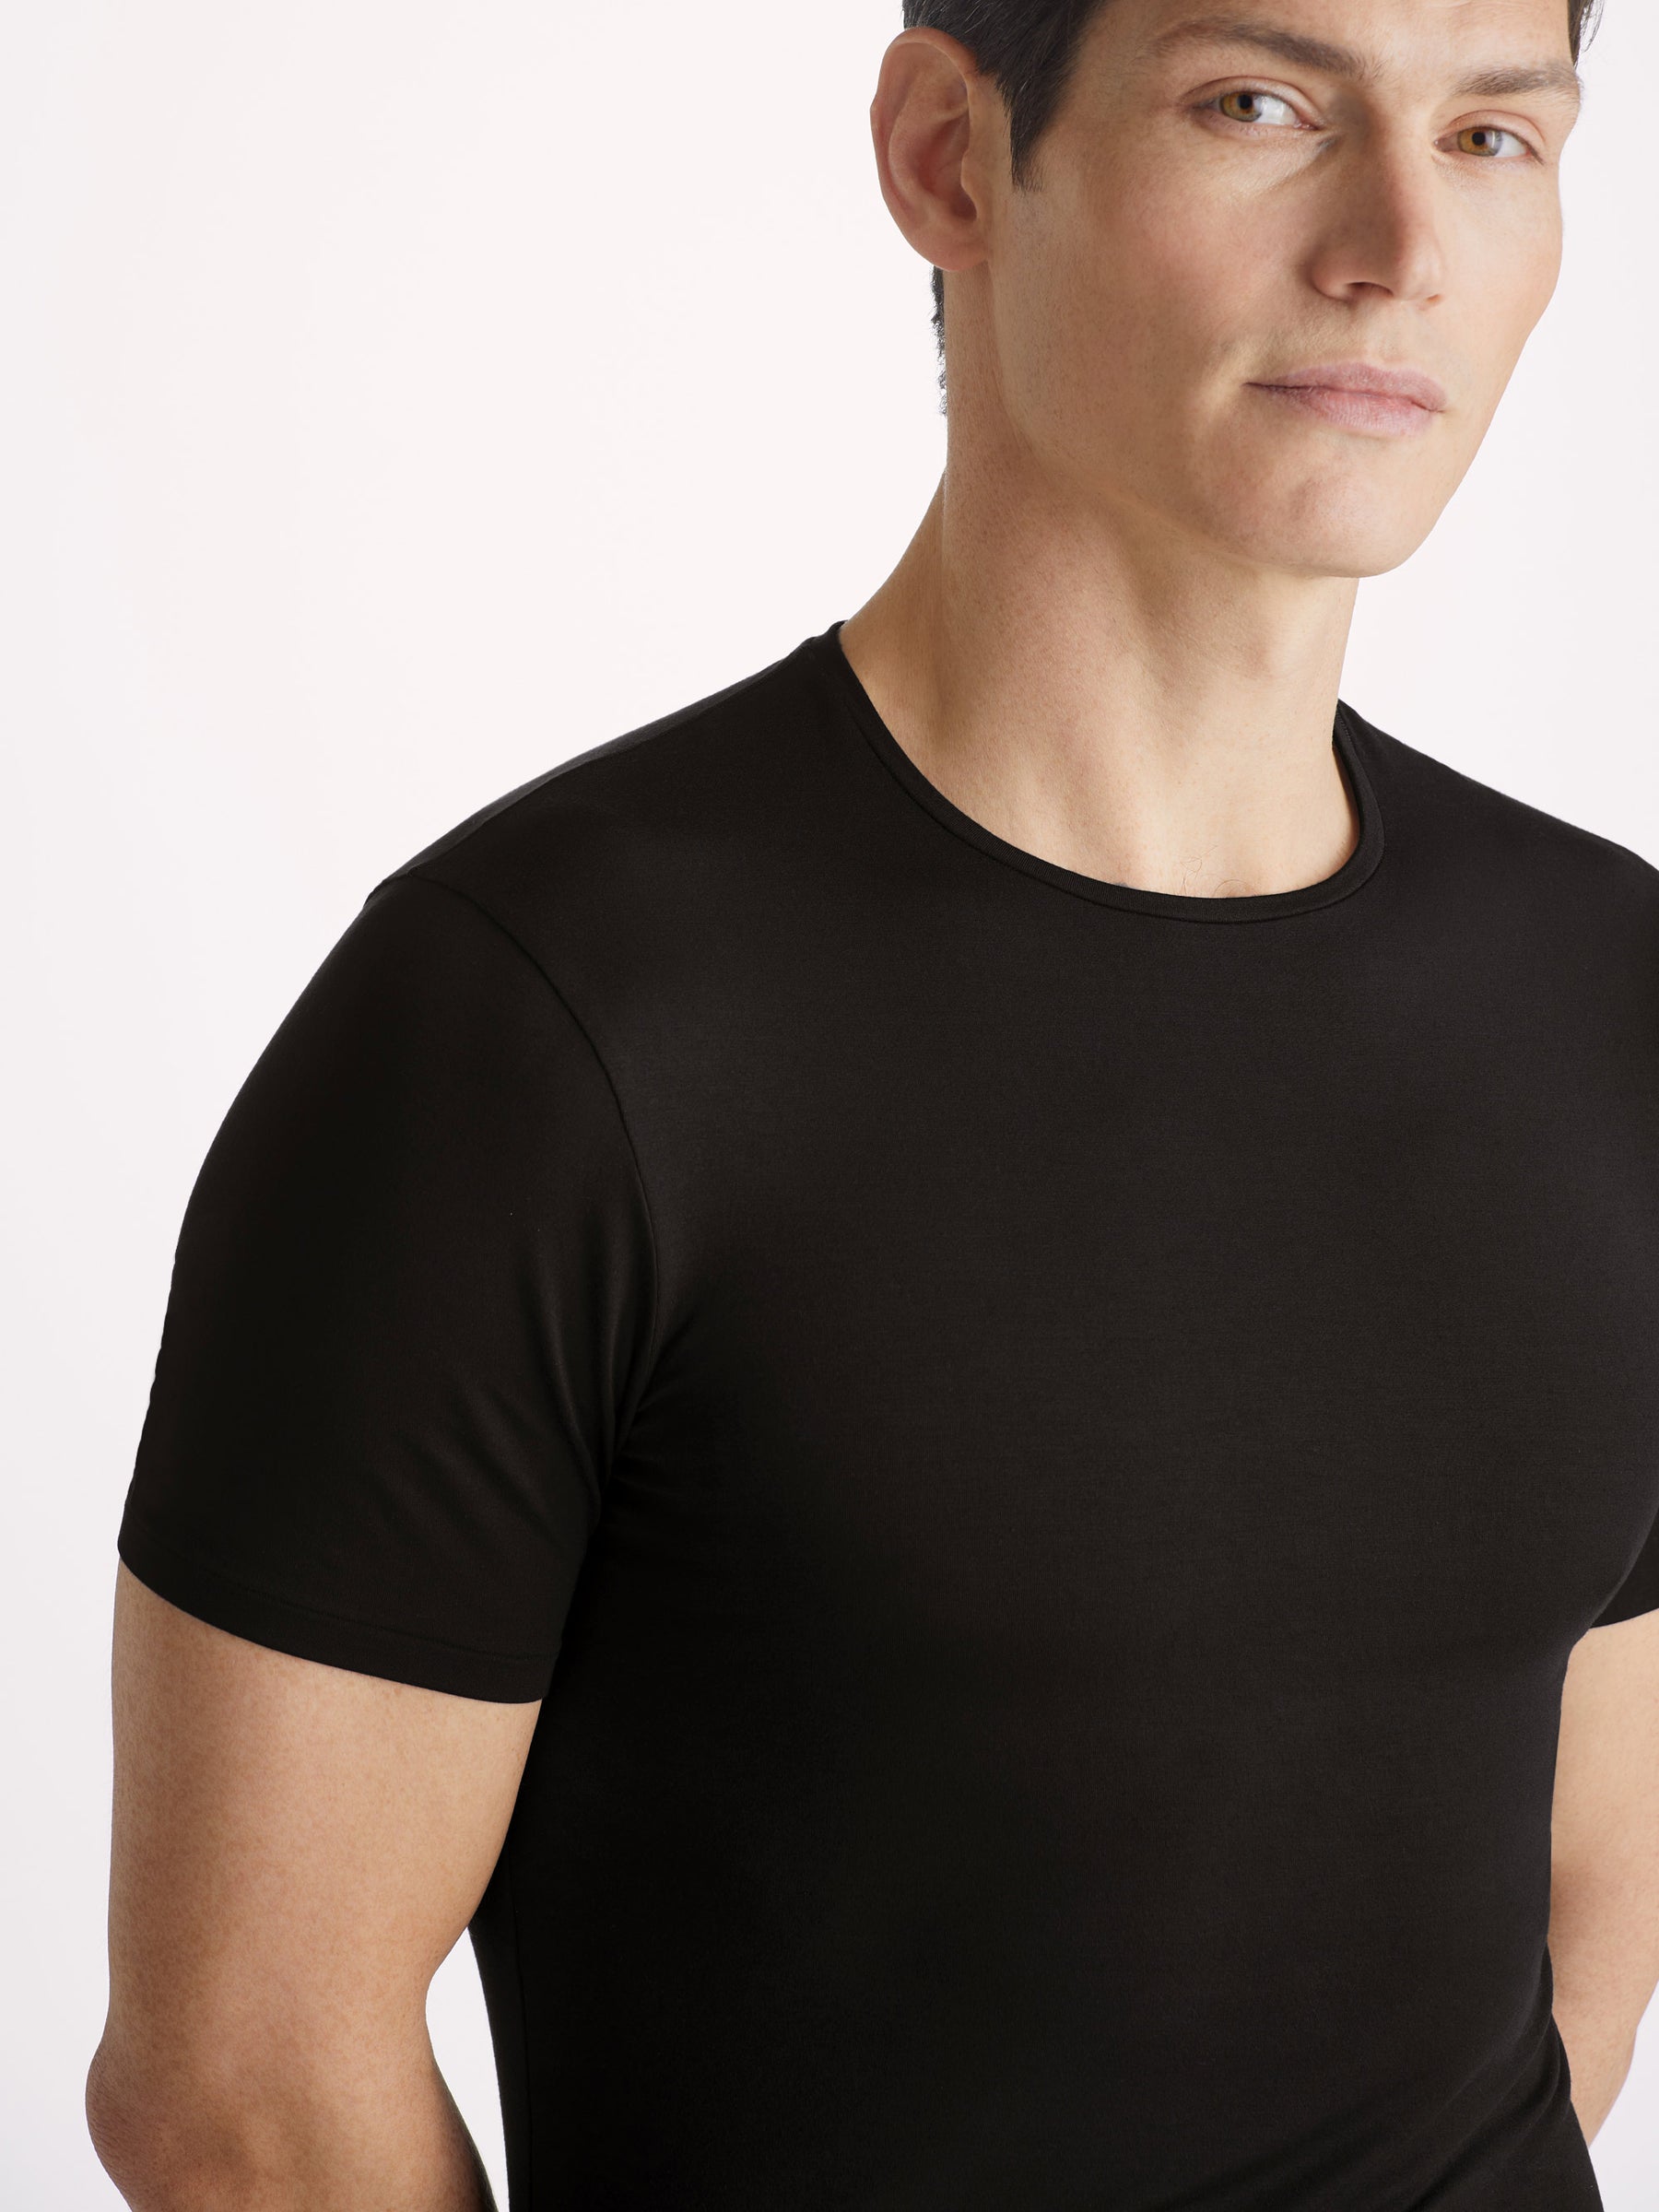 Men's Underwear T-Shirt Alex Micro Modal Stretch Black